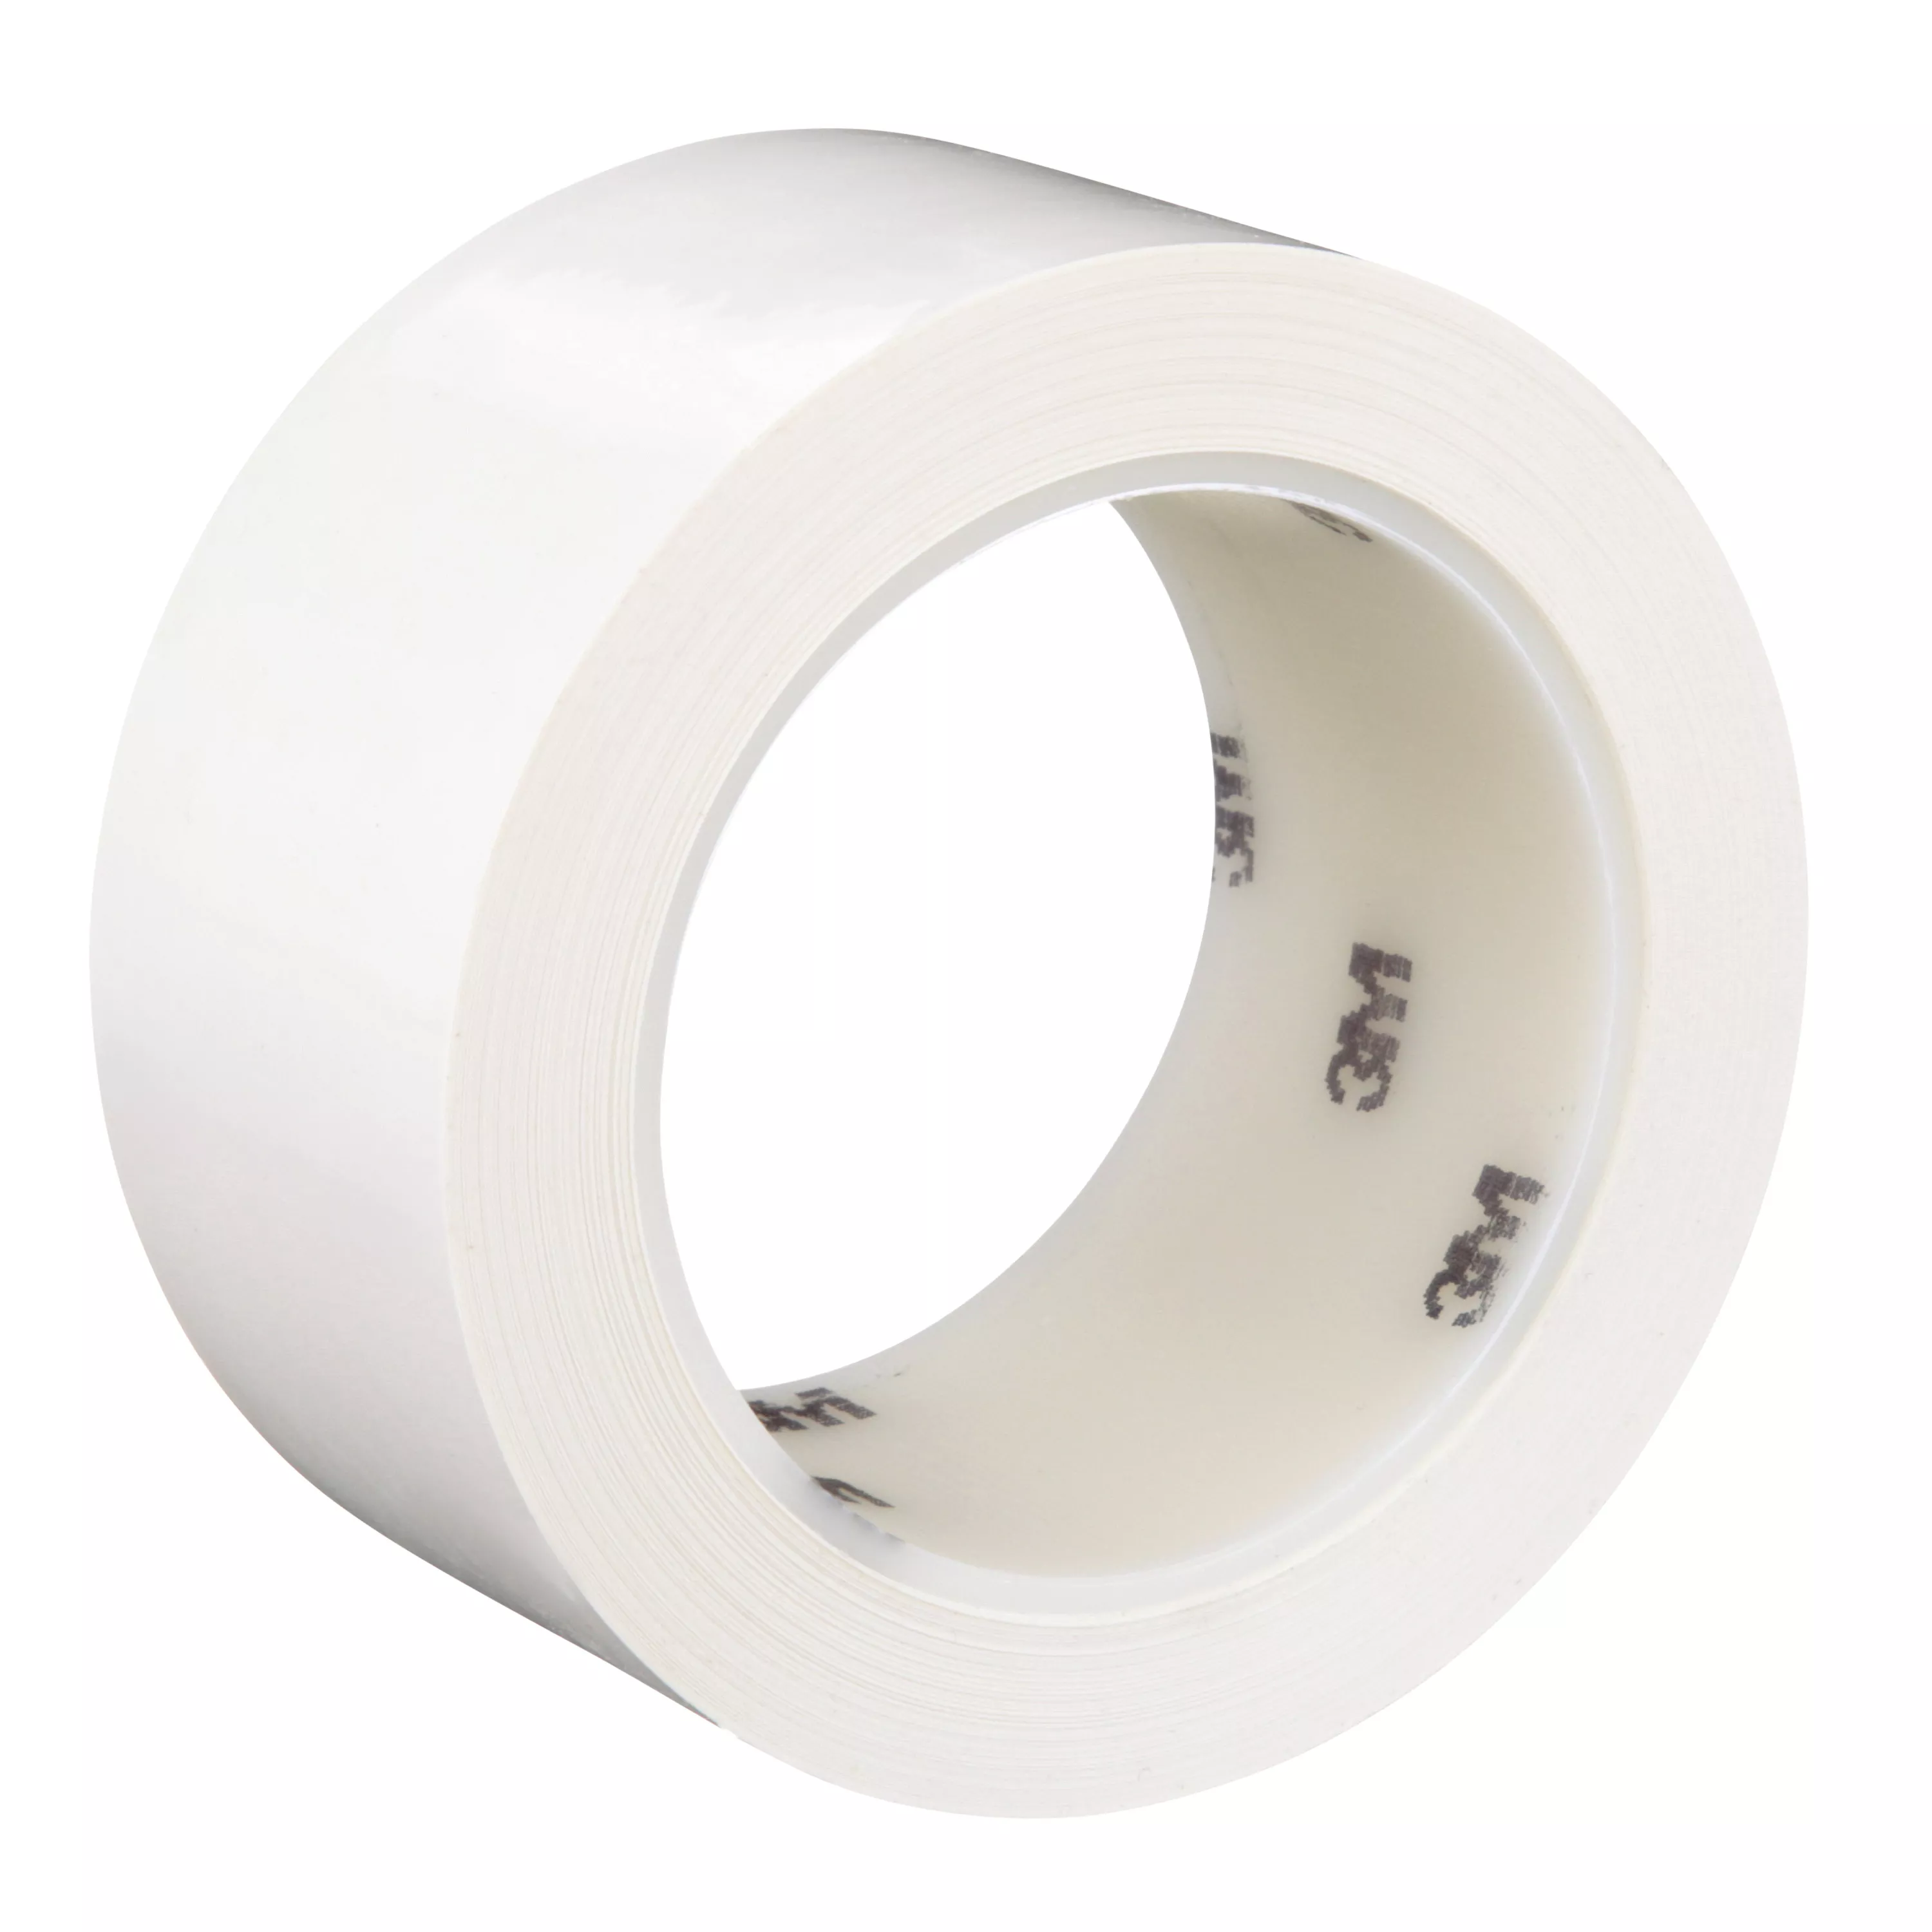 3M™ Polyethylene Tape 483, White, 2 in x 36 yd, 5.0 mil, 24 Roll/Case